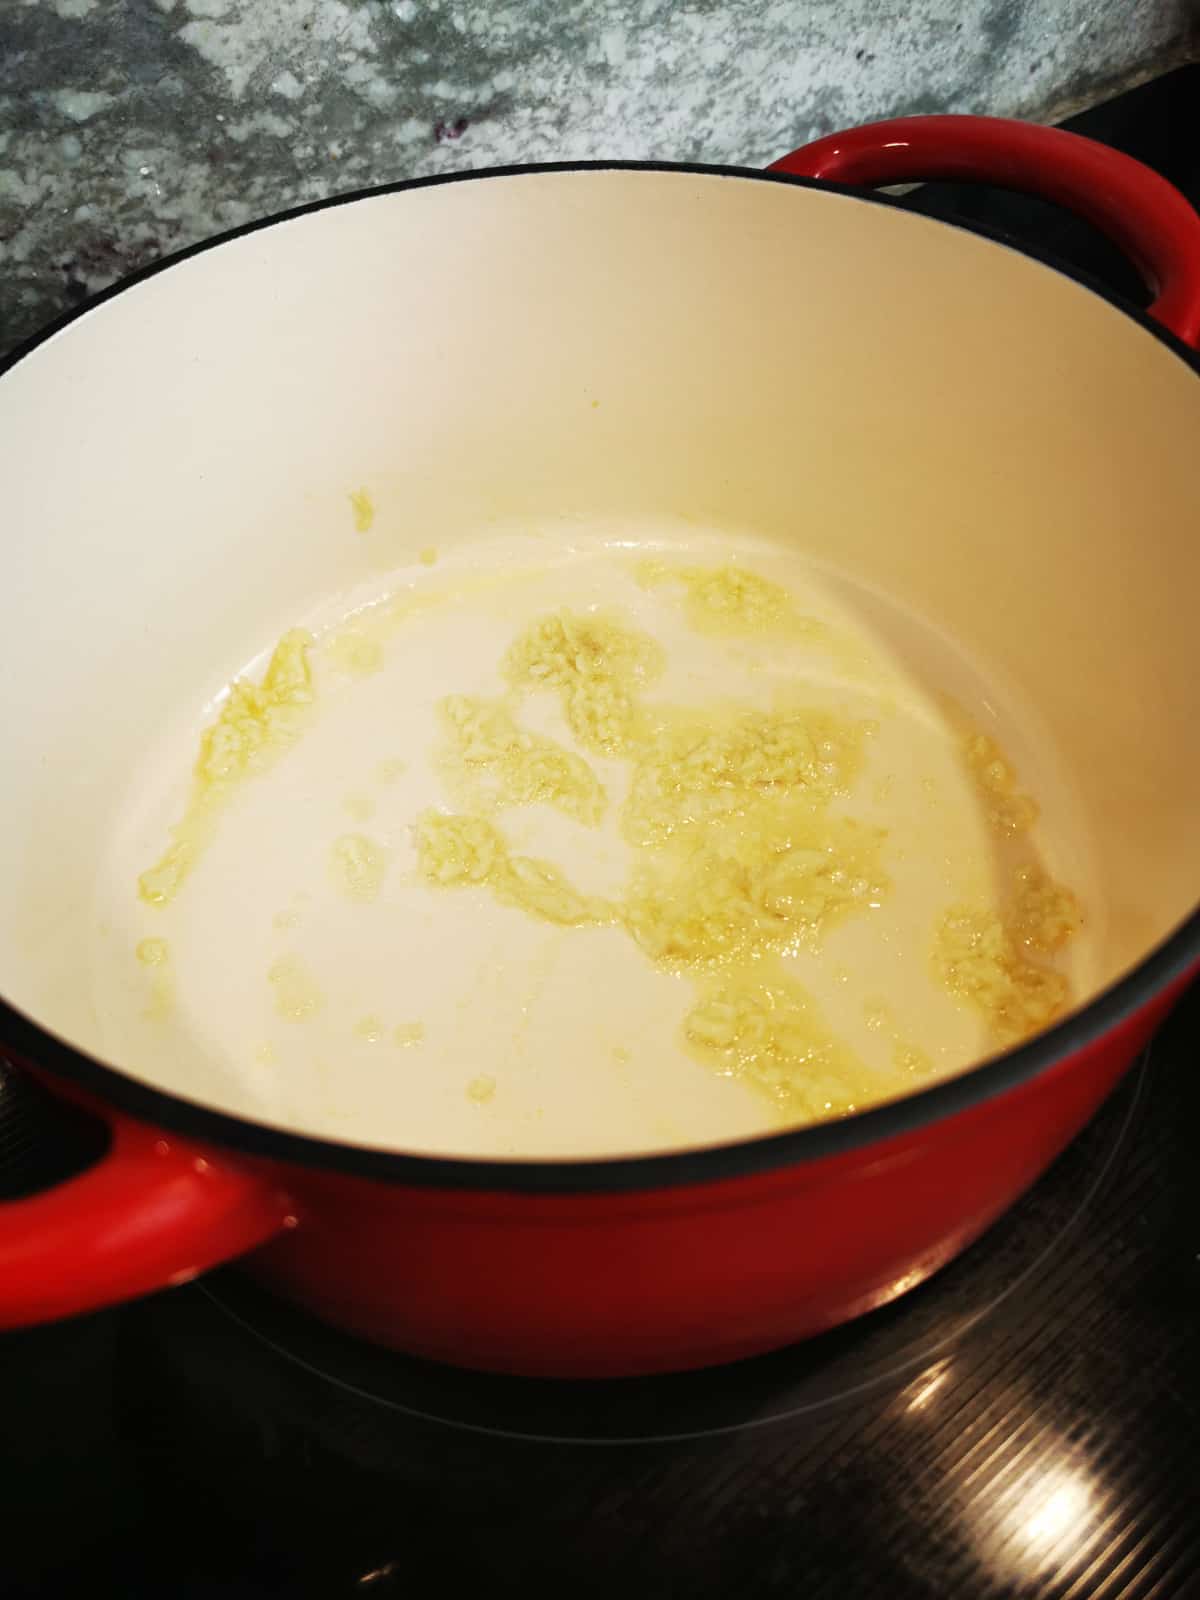 minced garlic sateeing in pot